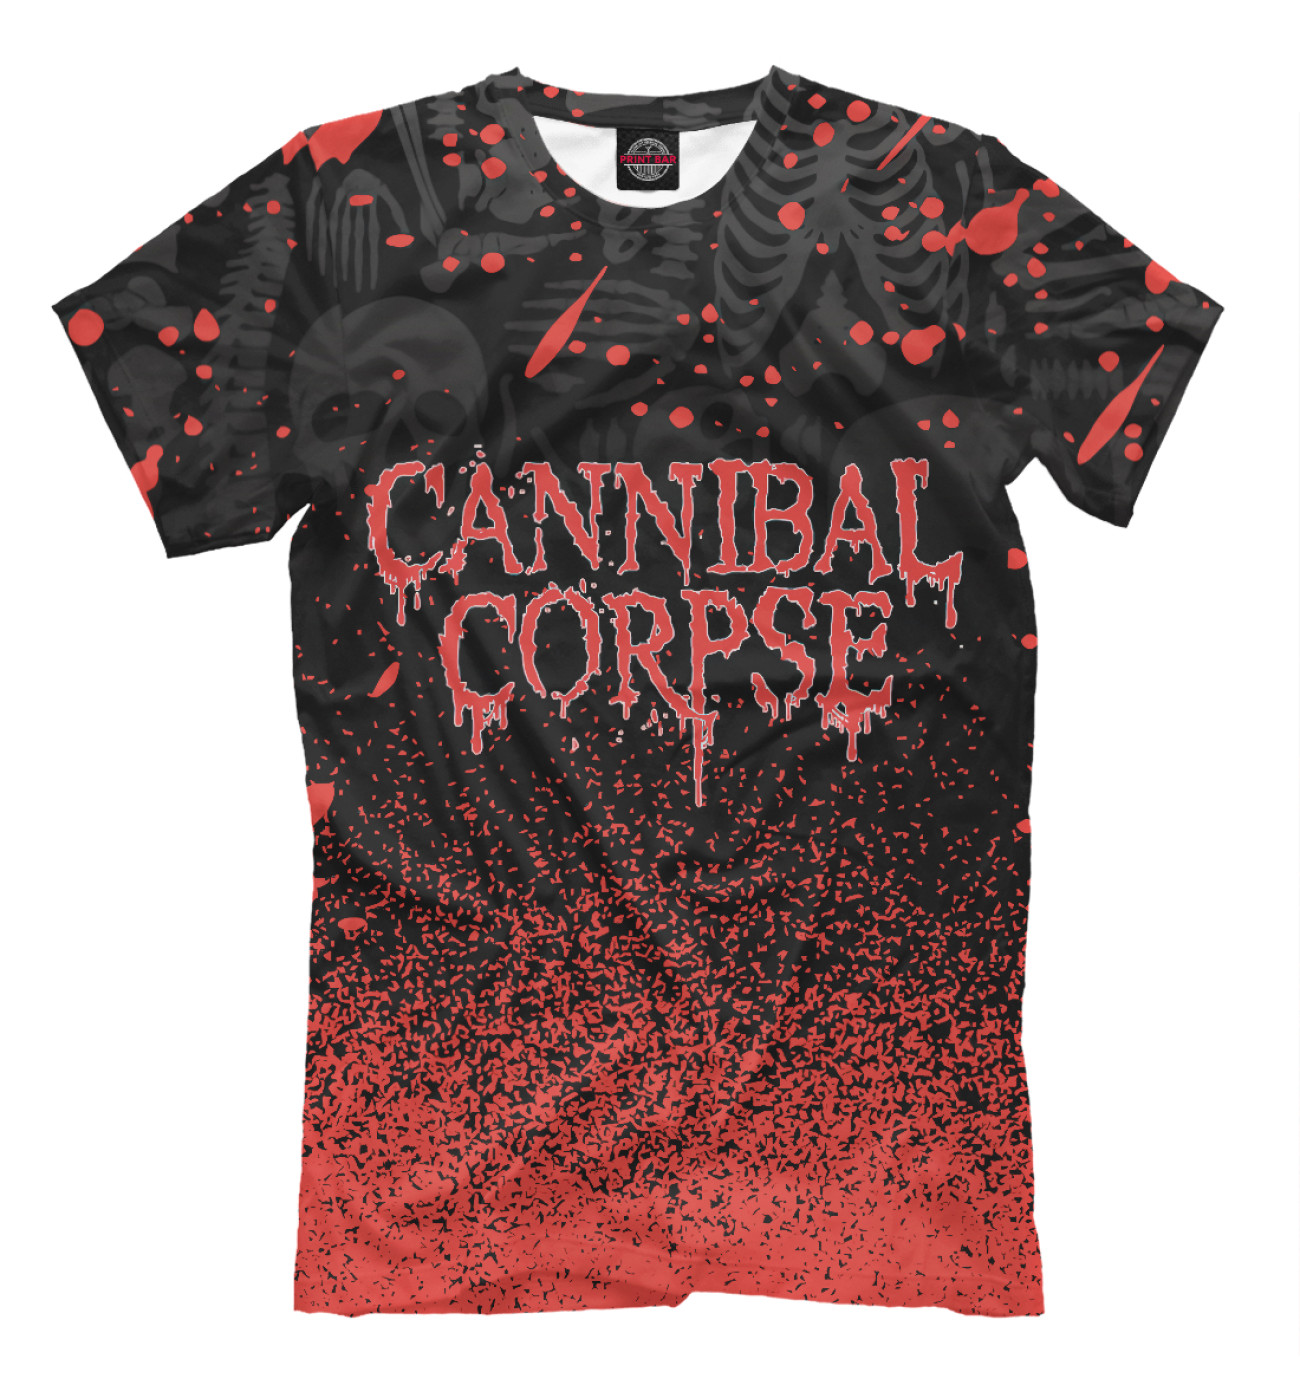 Мужская Футболка Cannibal Corpse, артикул: CCR-461412-fut-2